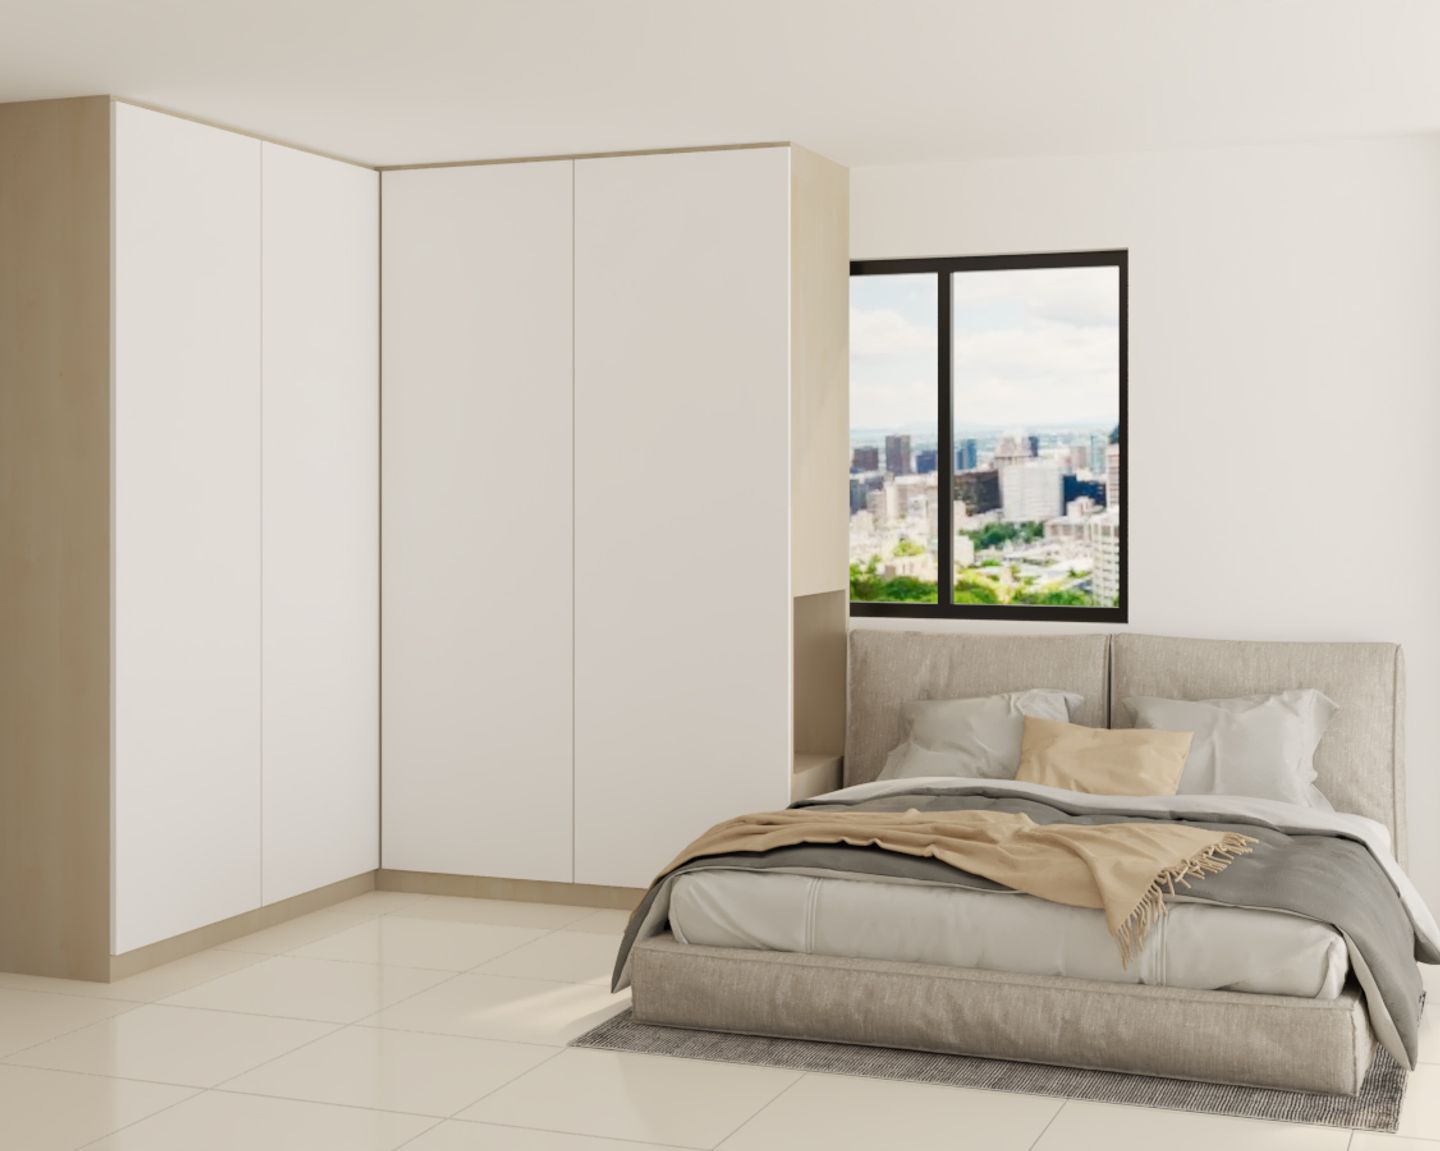 Master Bedroom Design With L-Shaped Wardrobe Unit - Livspace